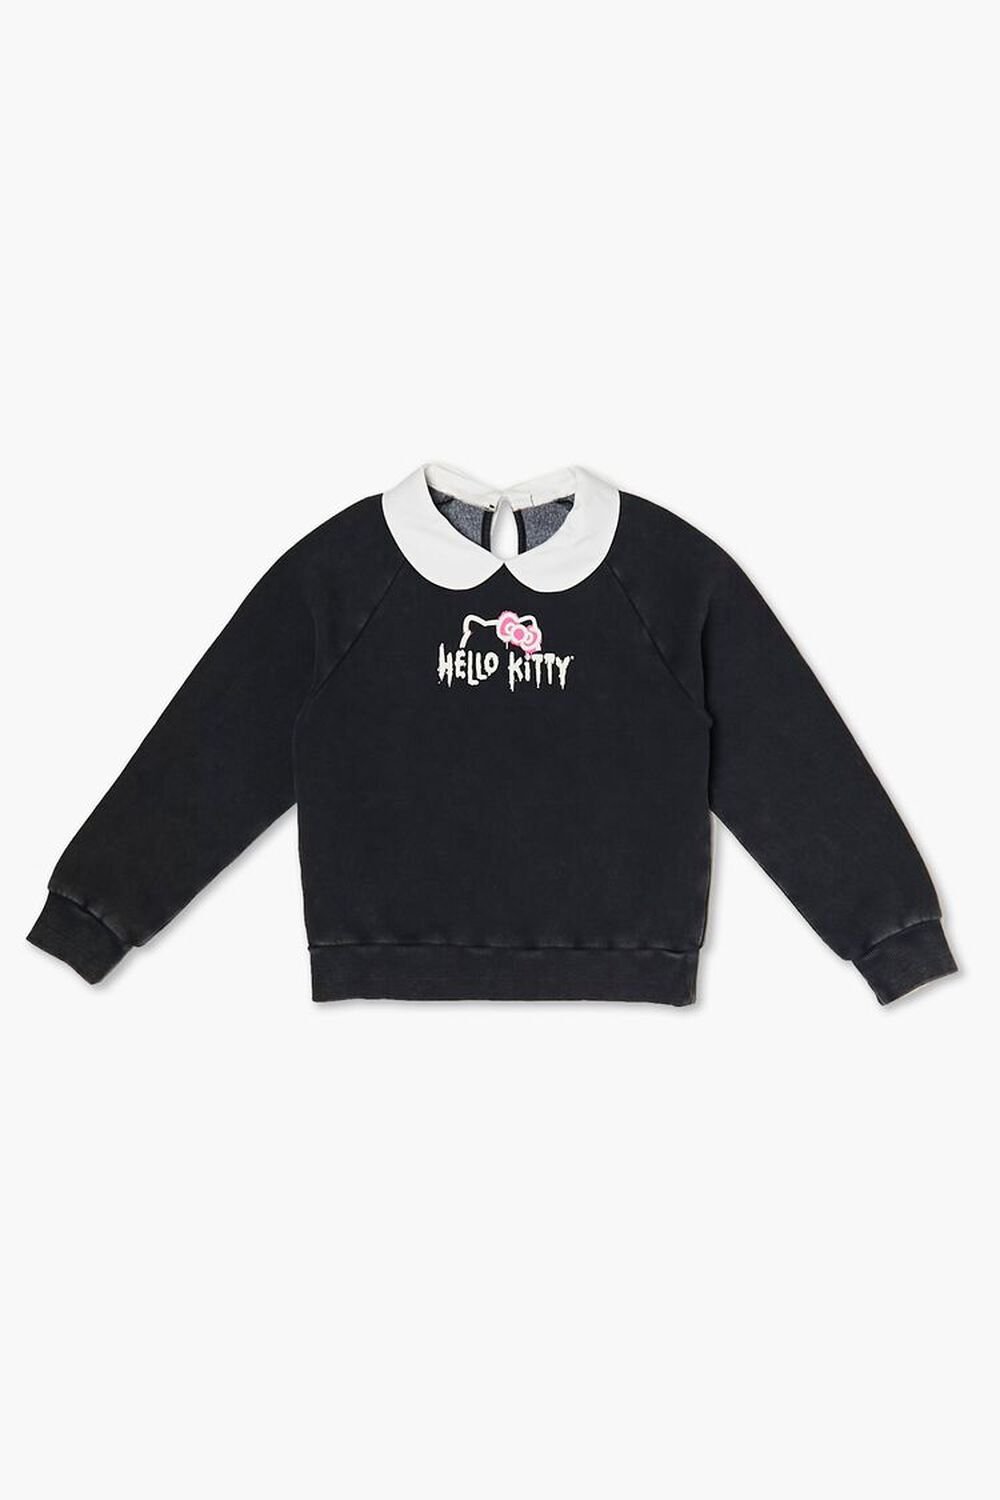 GREY/MULTI Girls Hello Kitty Collar Pullover (Kids), image 1